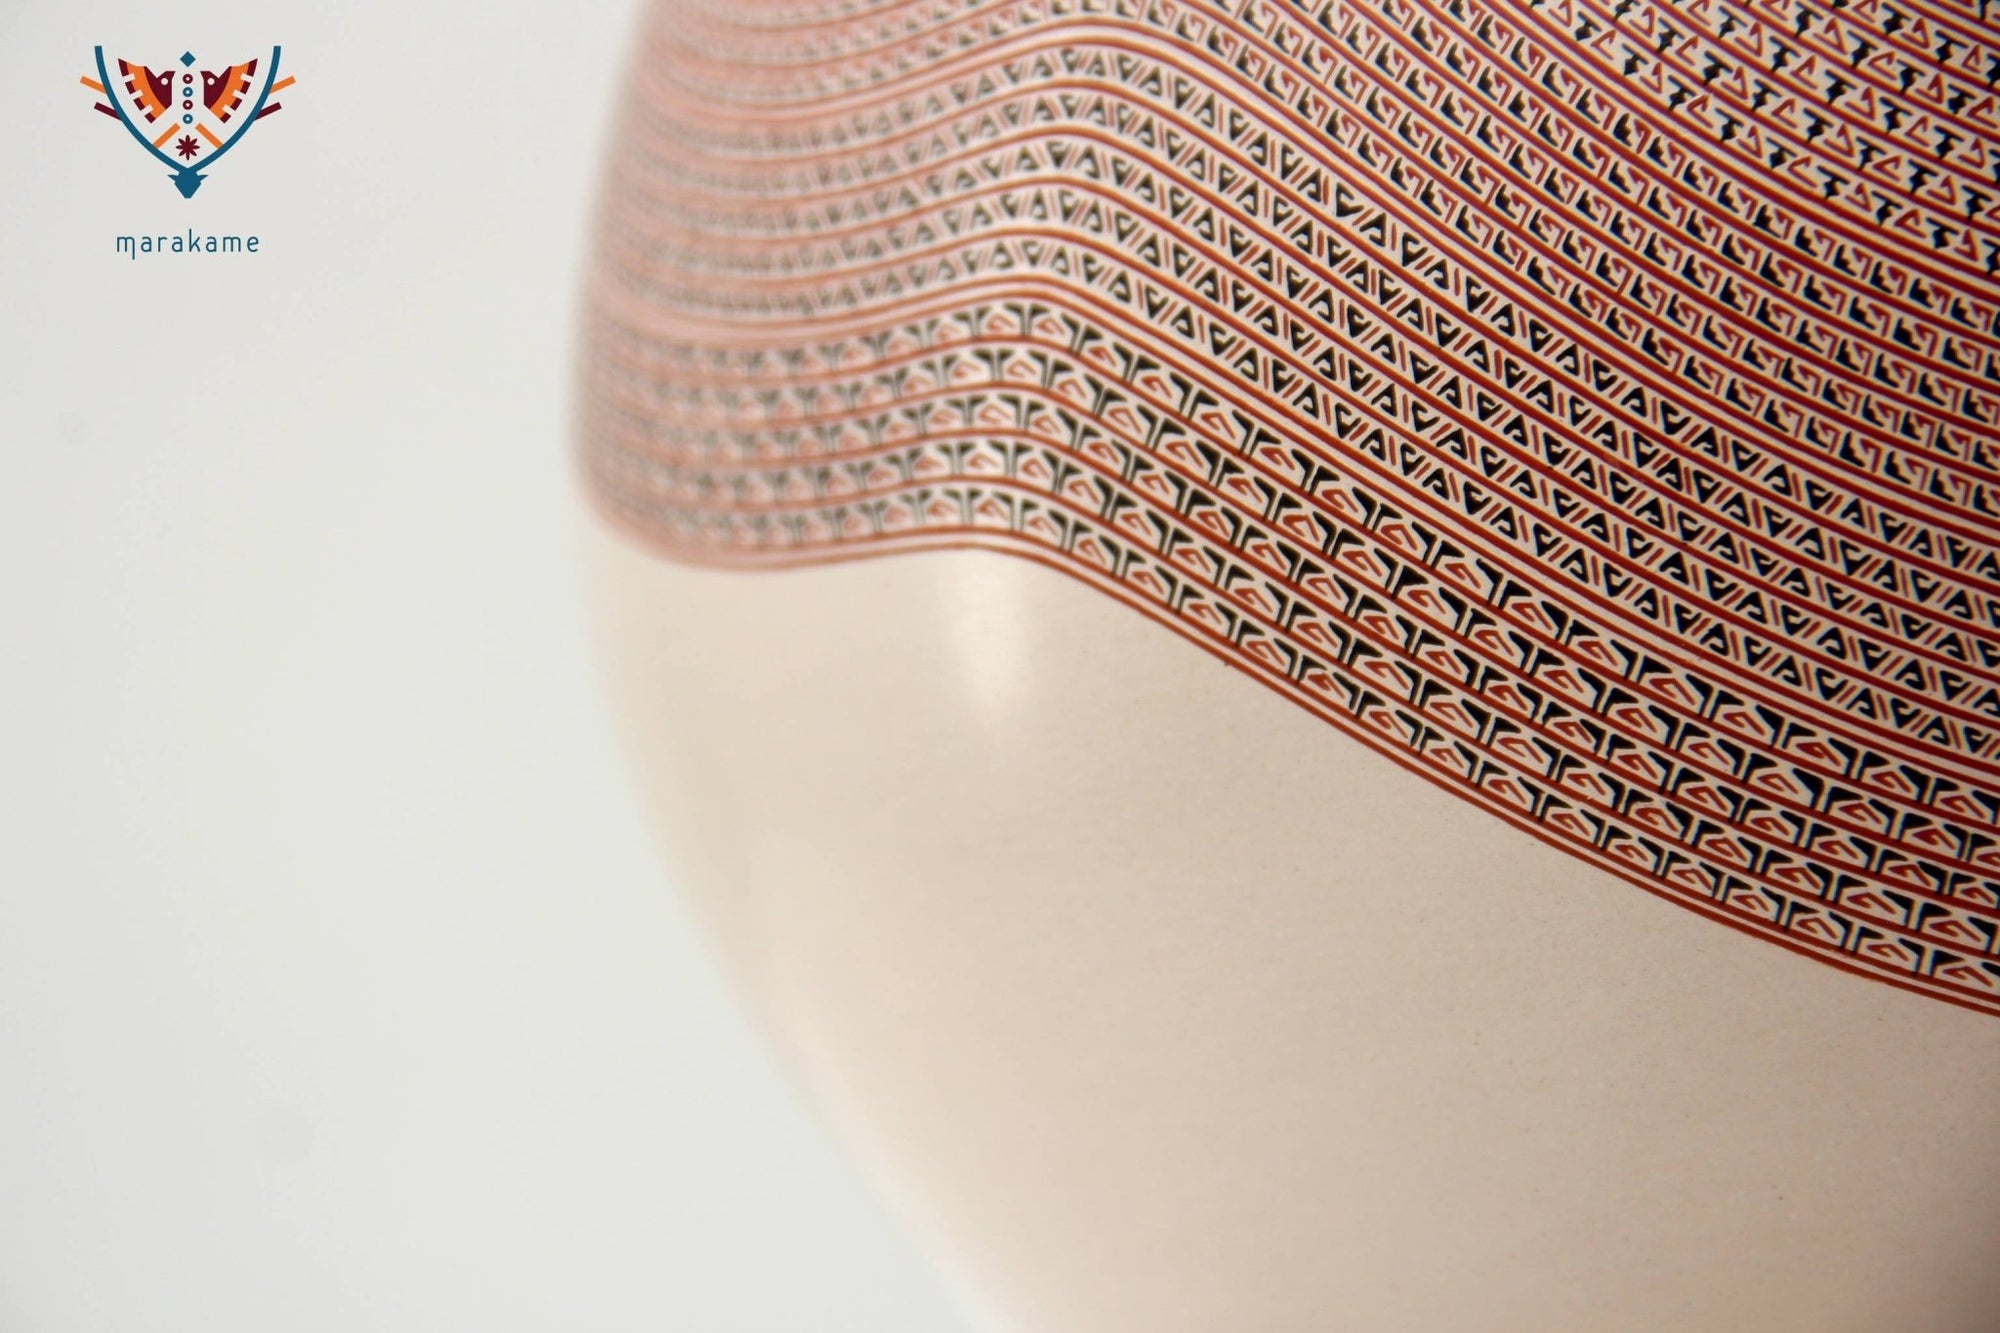 Mata Ortiz Keramik – Aras – Huichol-Kunst – Marakame